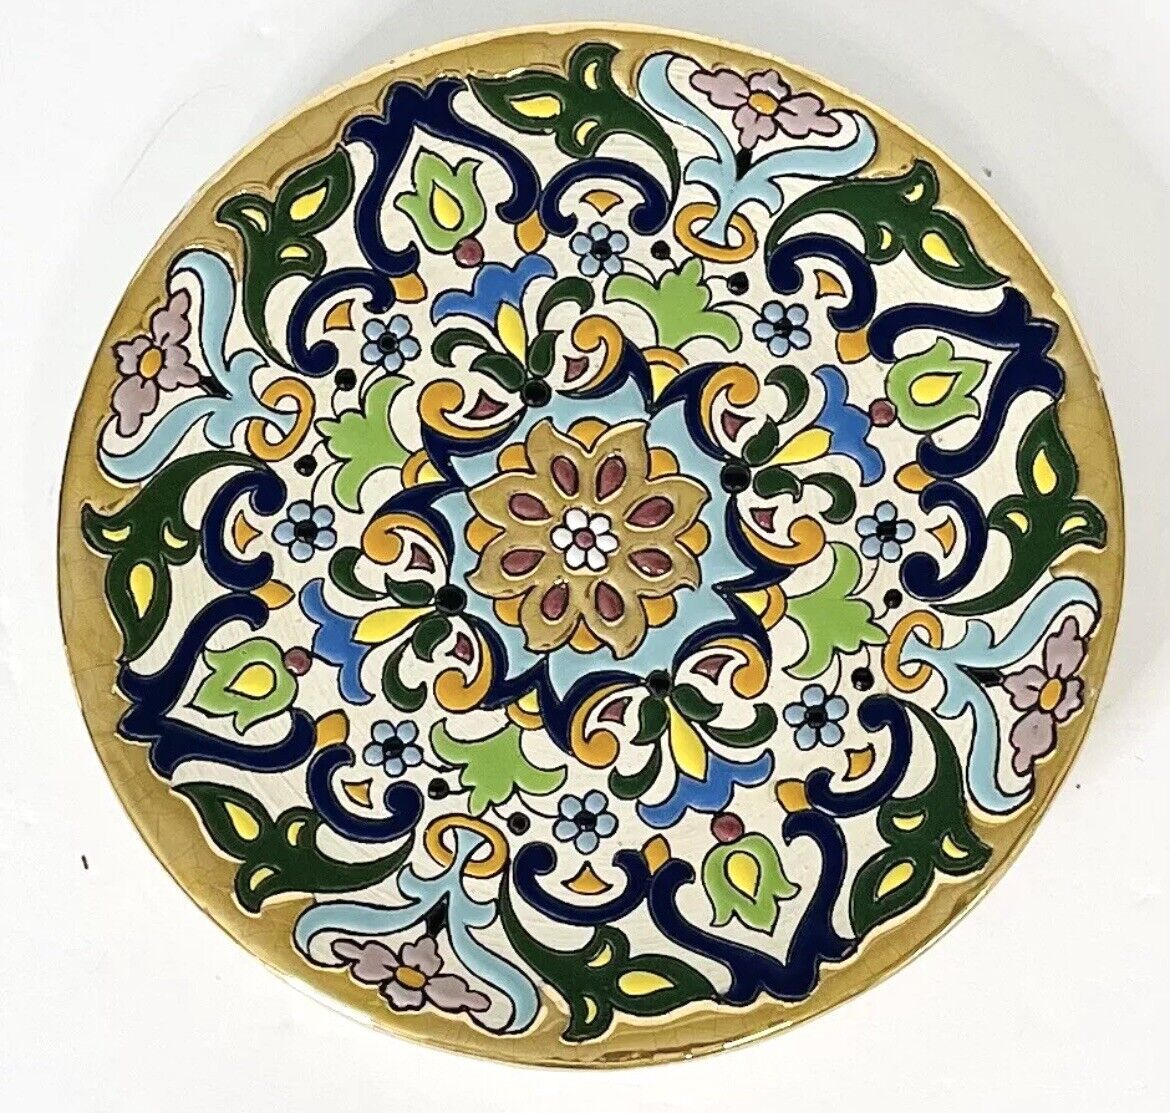 Sevilla Ceramic Spain Art Plate Wall 24k Enamel Vintage 8 Inch Colorful Mosaic